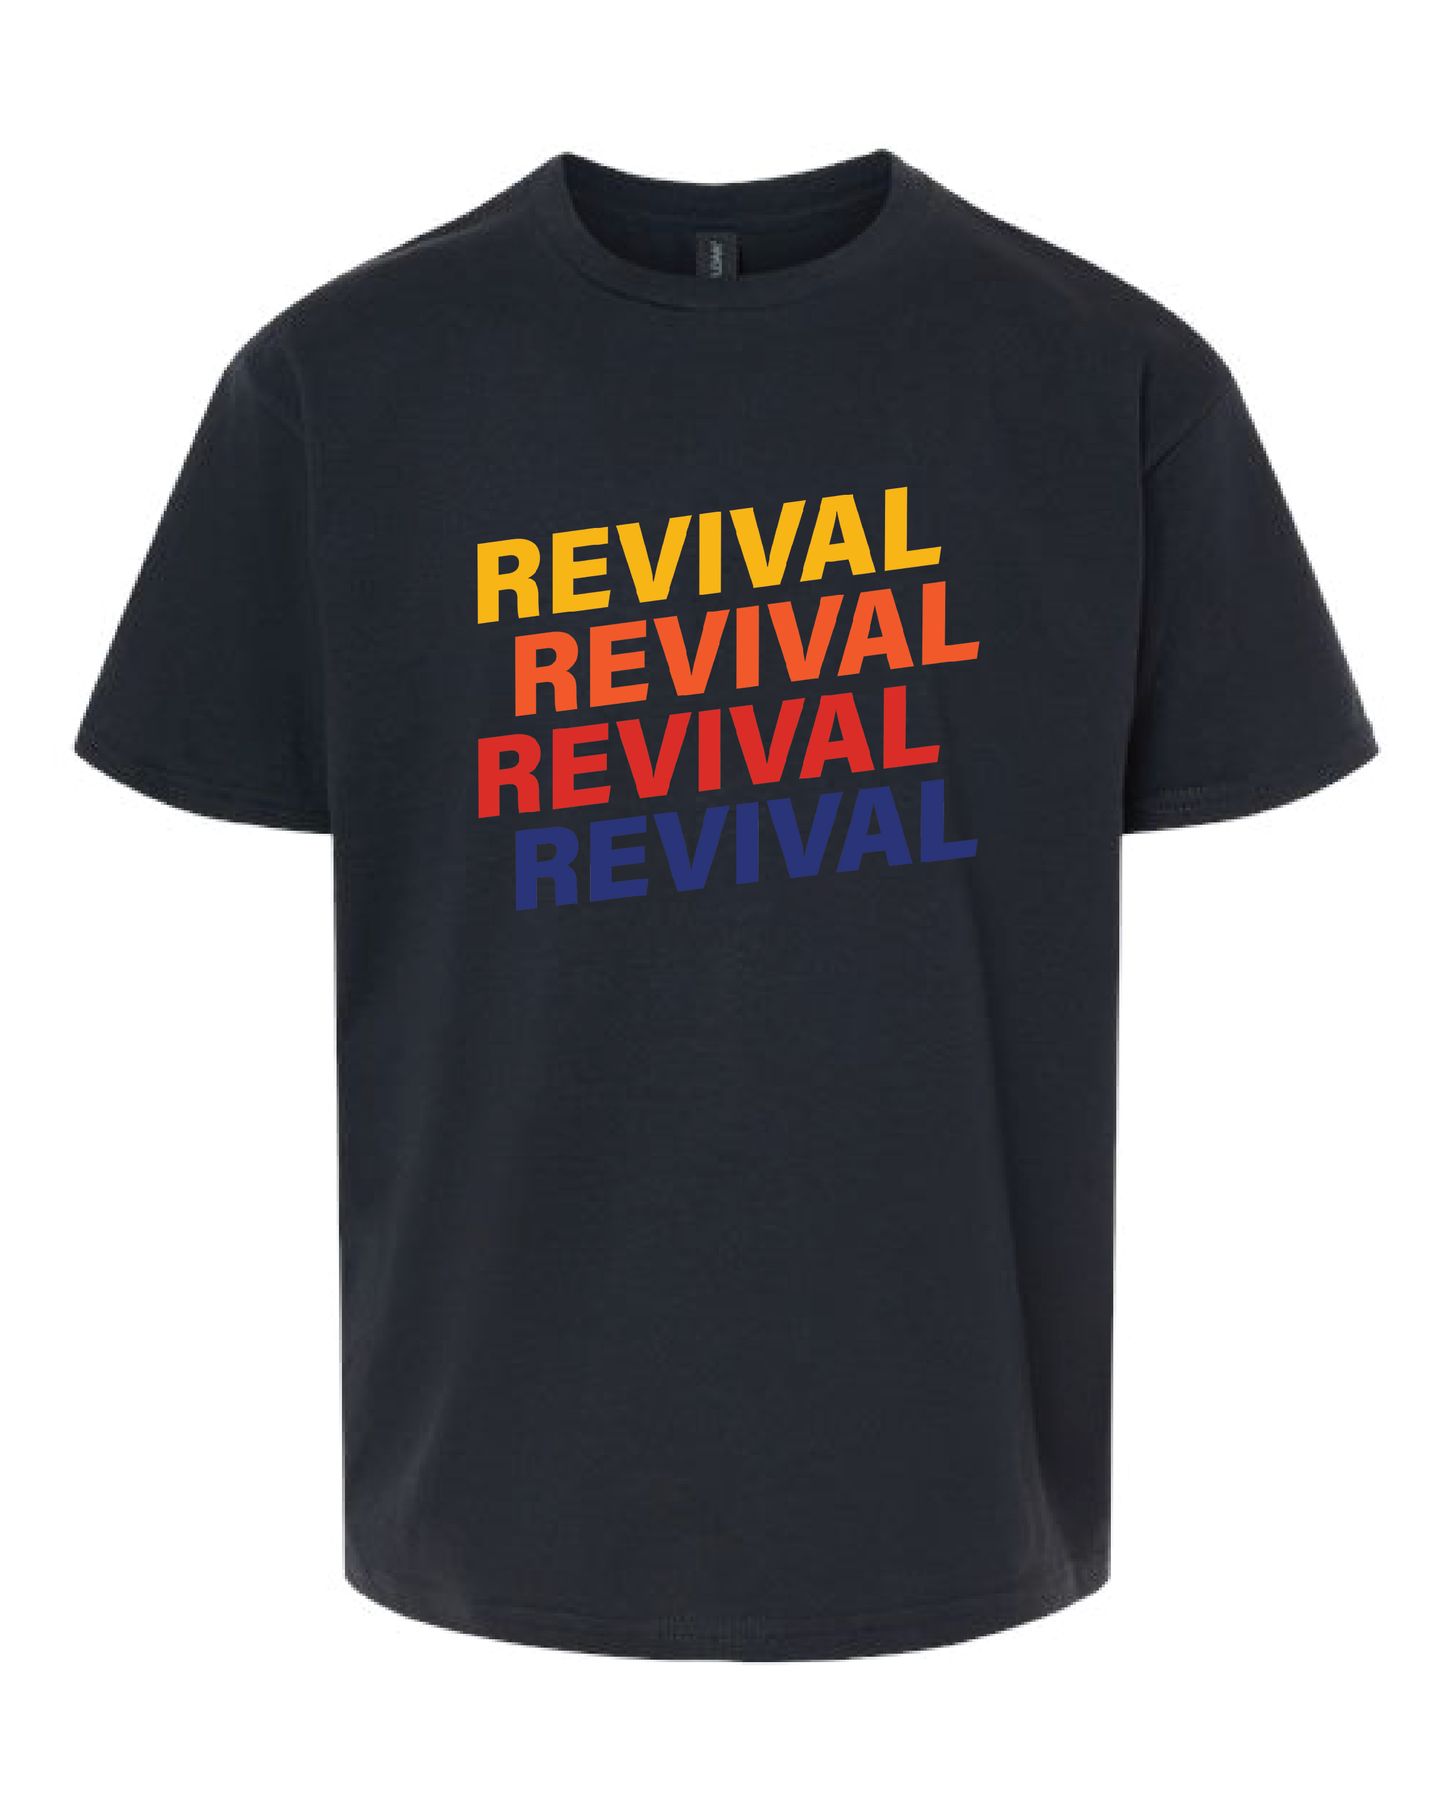 Retro Revival T Shirt